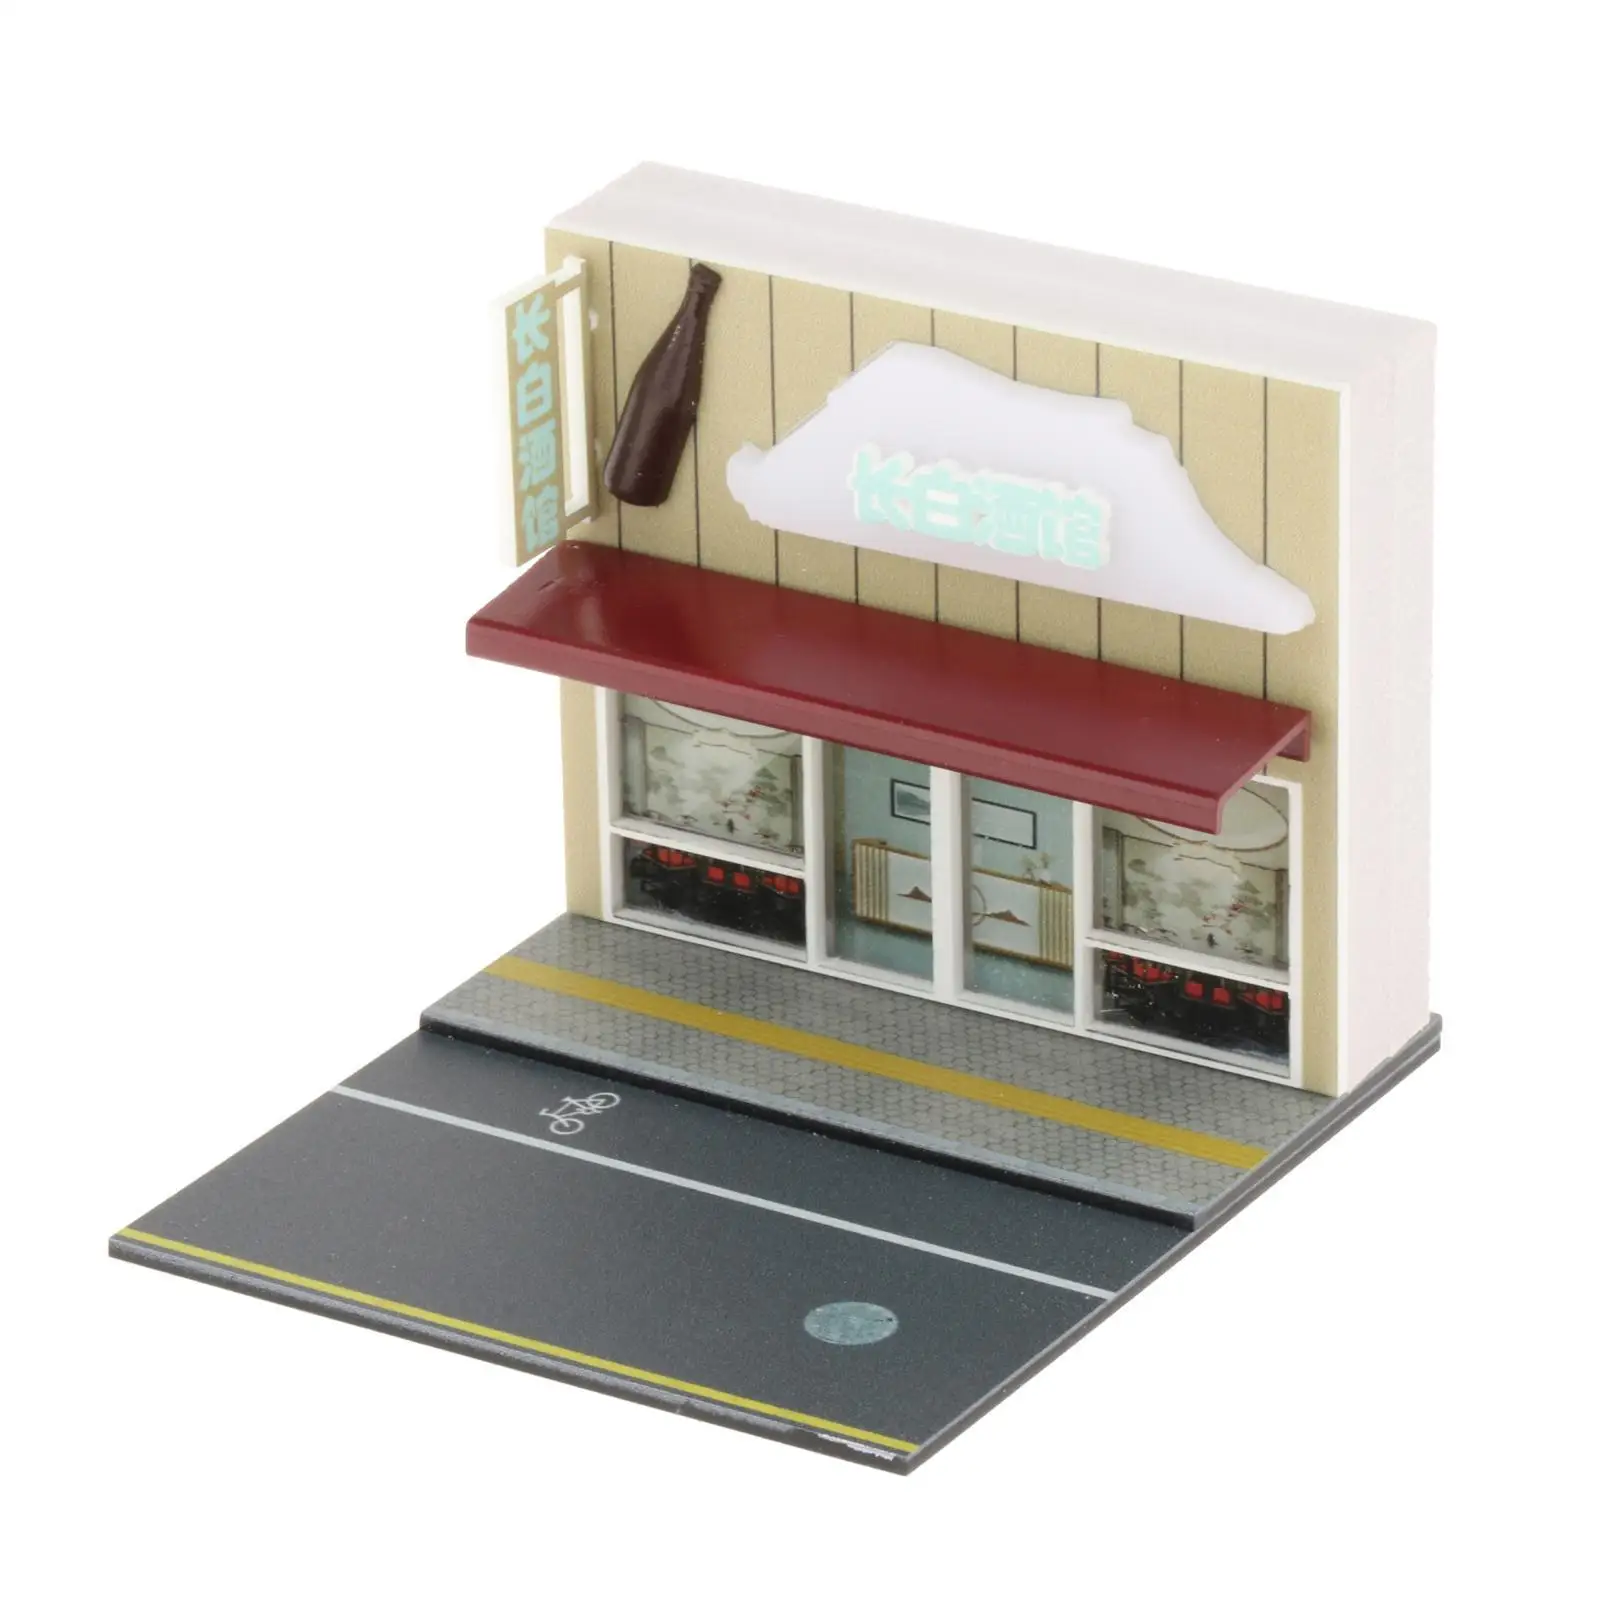 1:64 Diorama Model Assemble Diy Buildings Kits for Dollhouse Decoration Street Building Scene Props Micro Landscape Ornament